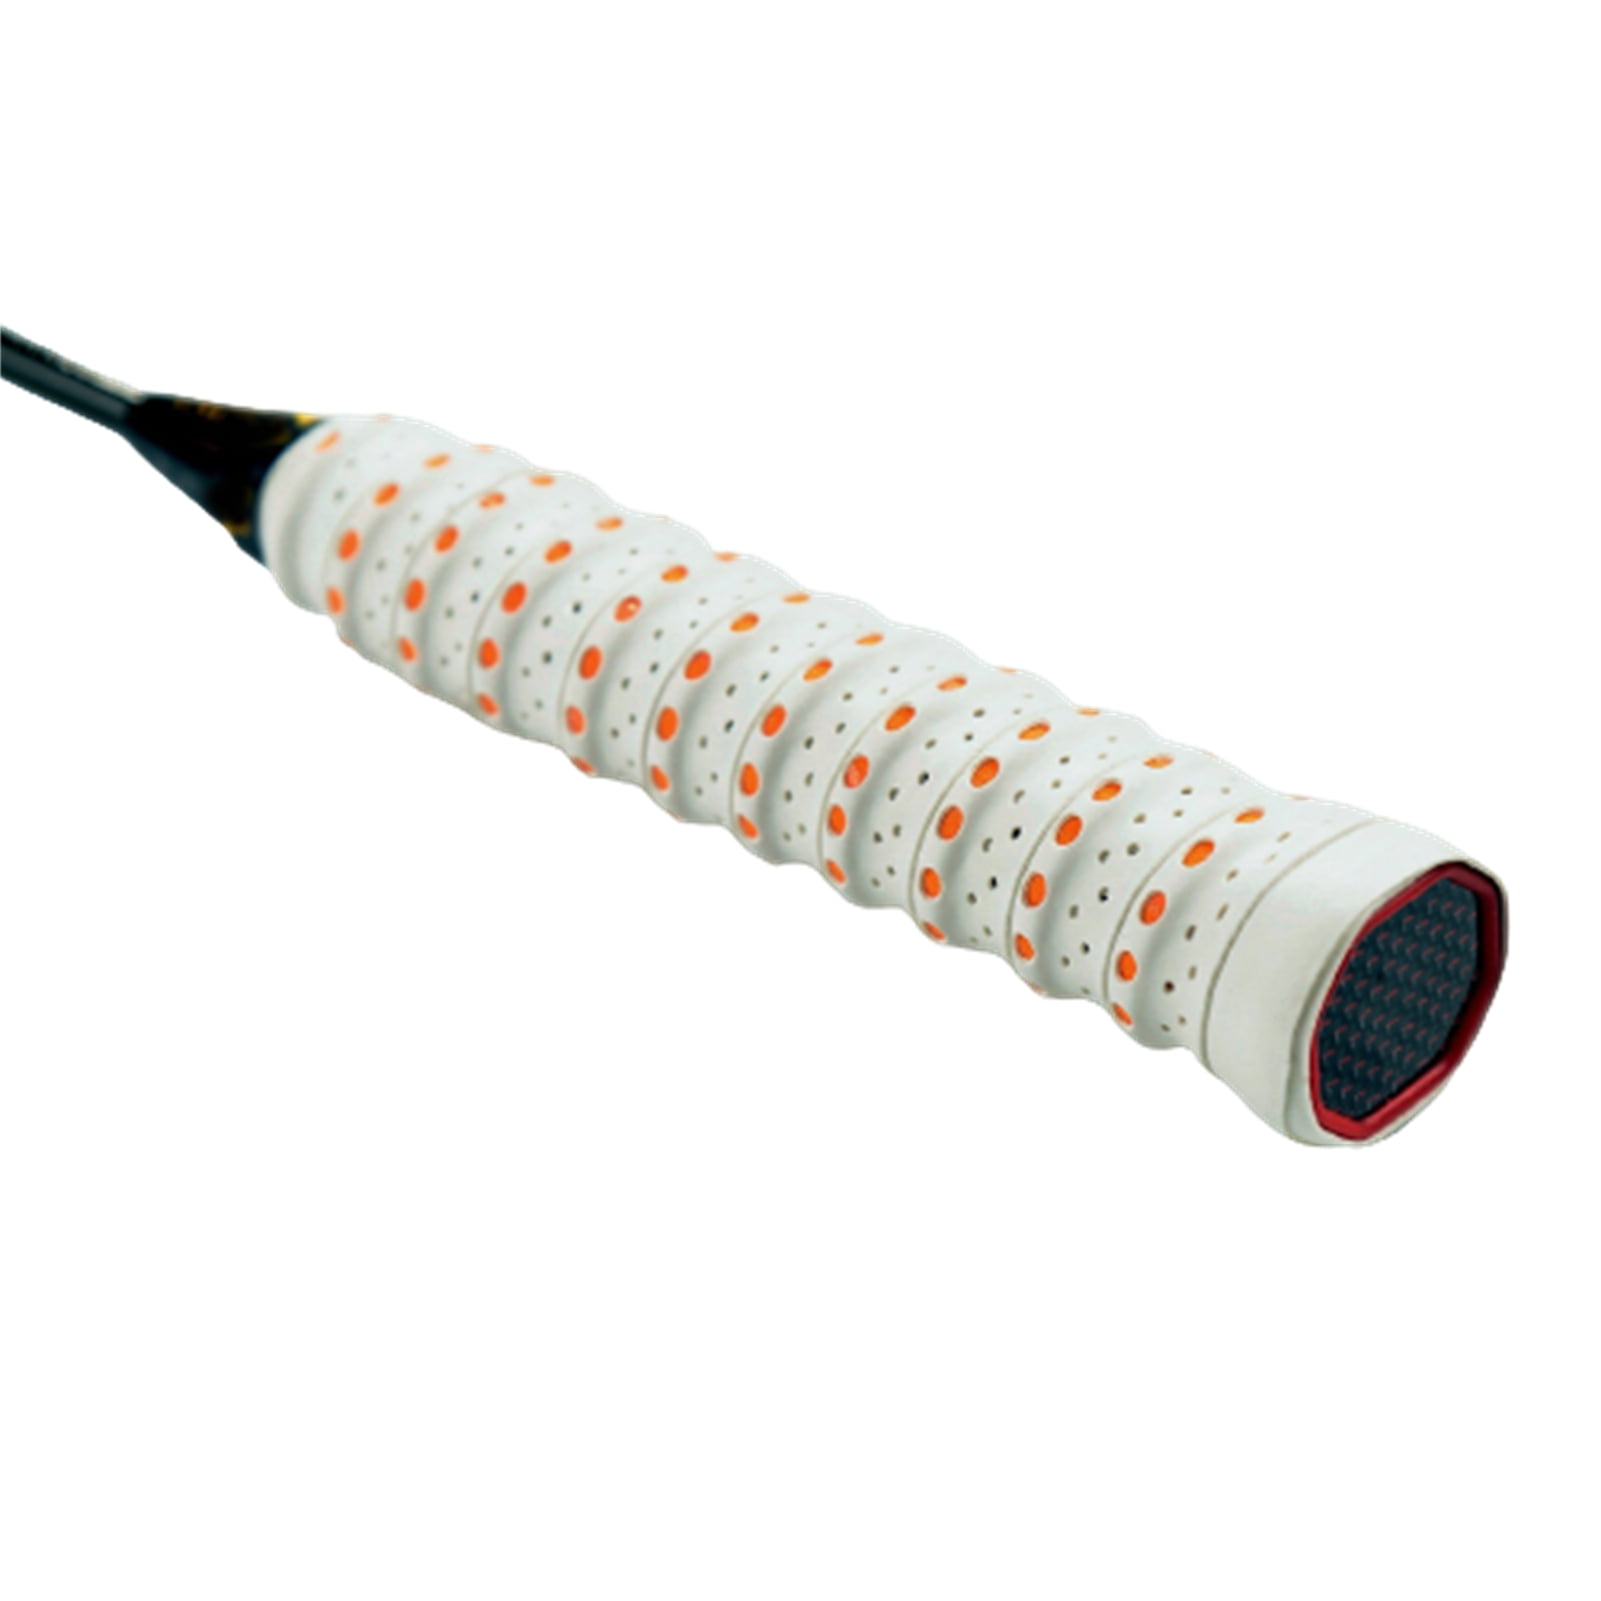 Stretchy Anti Slip Racket Over Grip Roll Tennis/Badminton Squash Handle Tape 